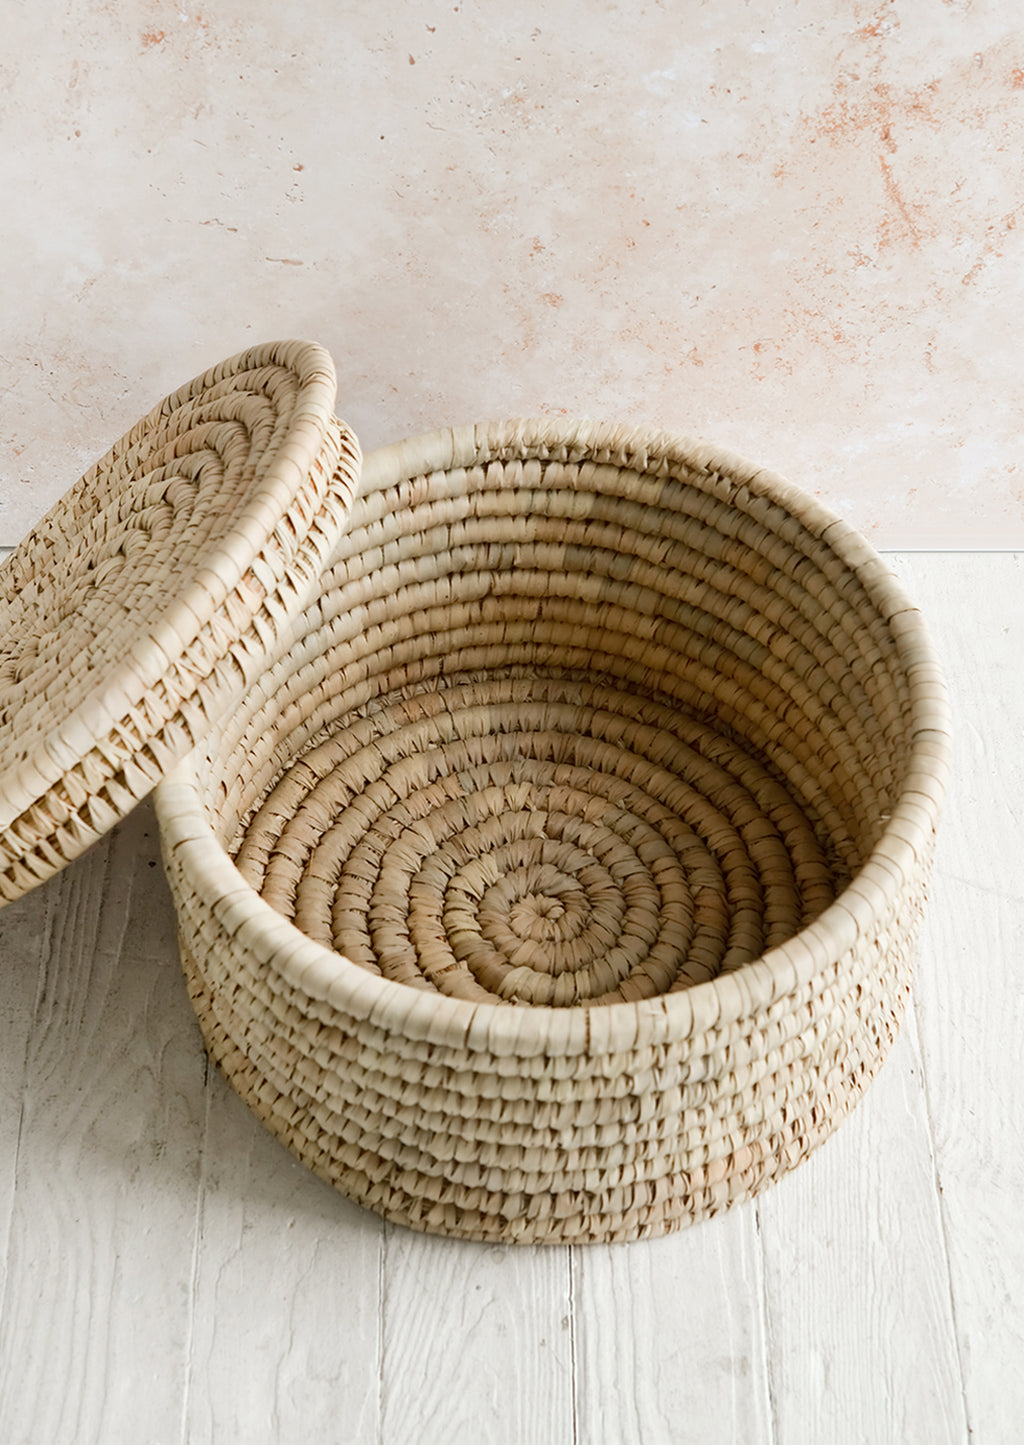 3: A round palm leaf storage basket with lid askew.